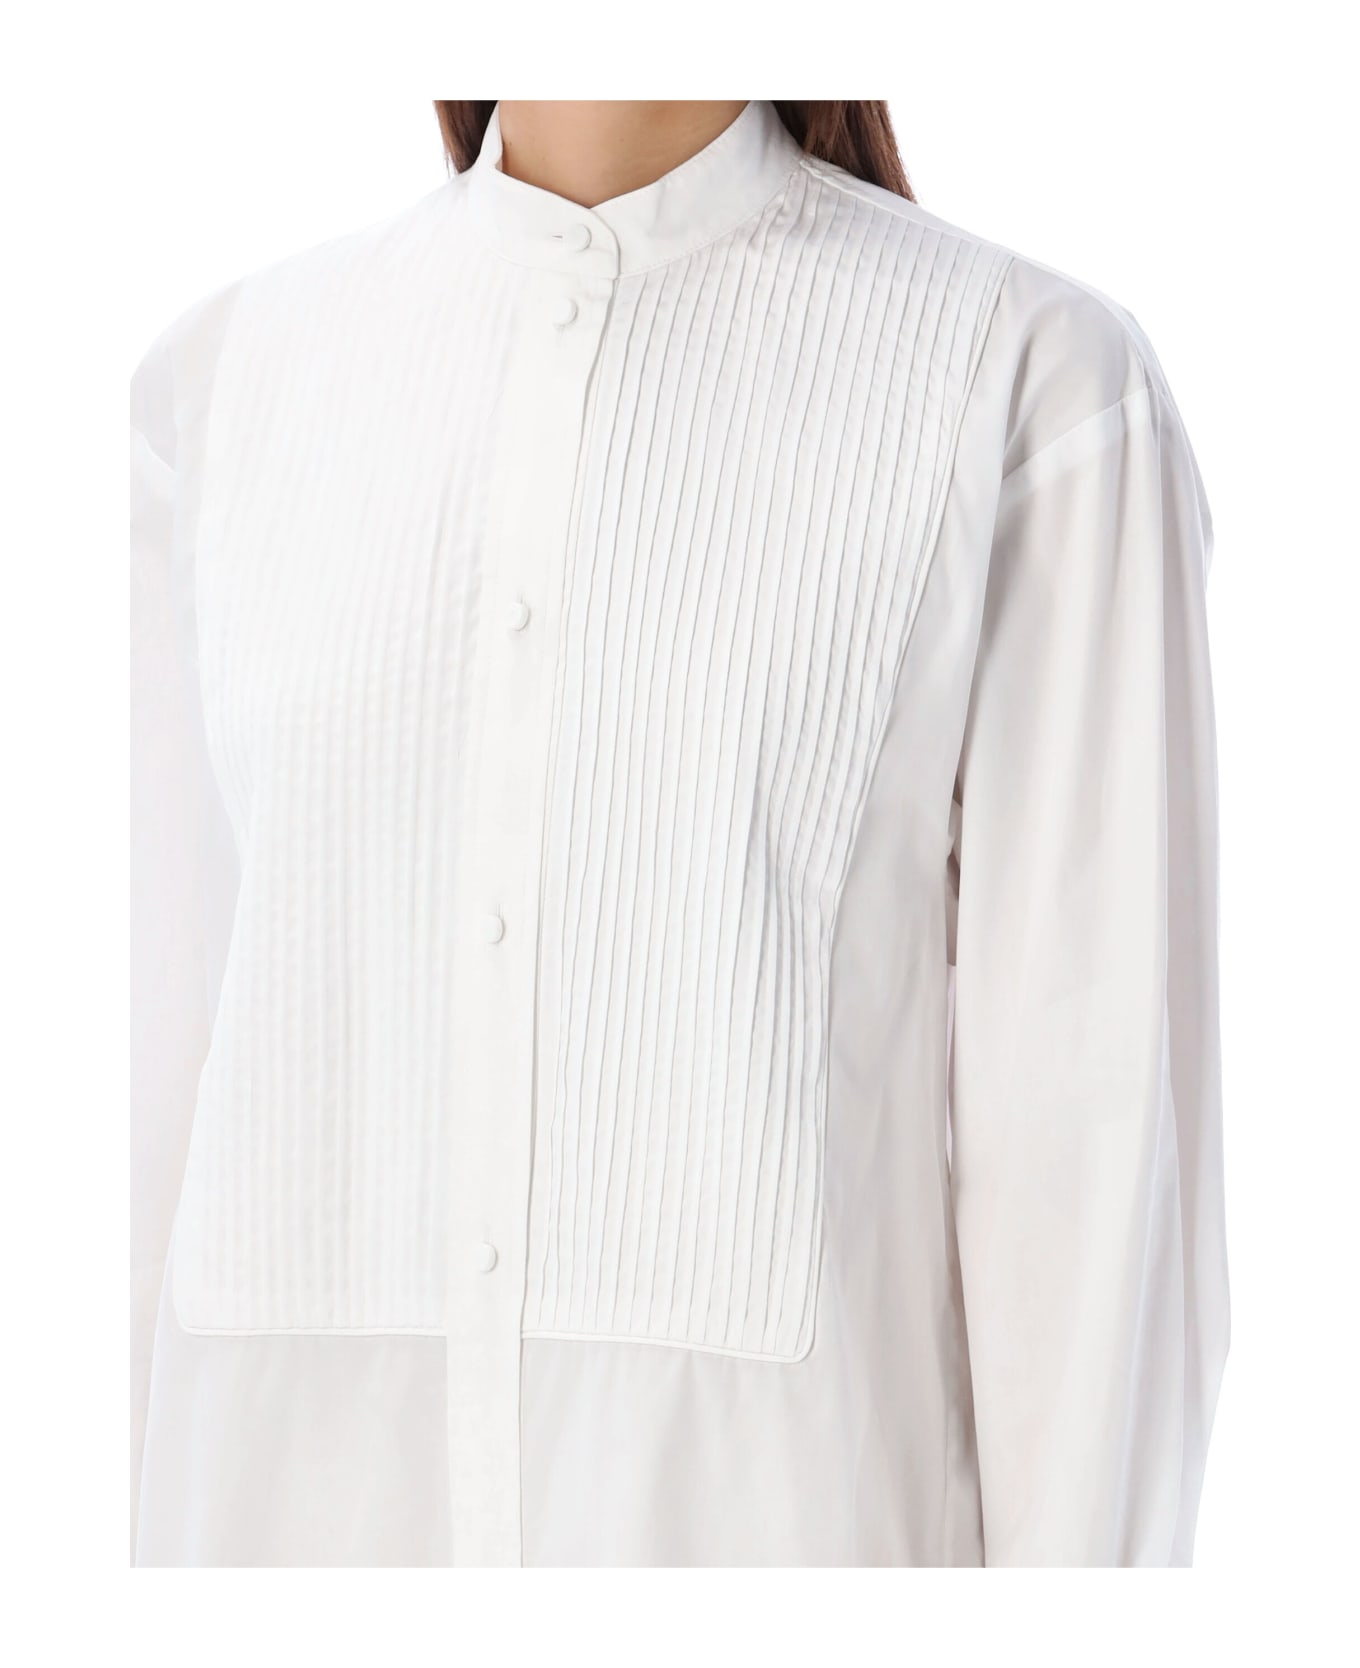 Isabel Marant Rineta Shirt Dress - WHITE